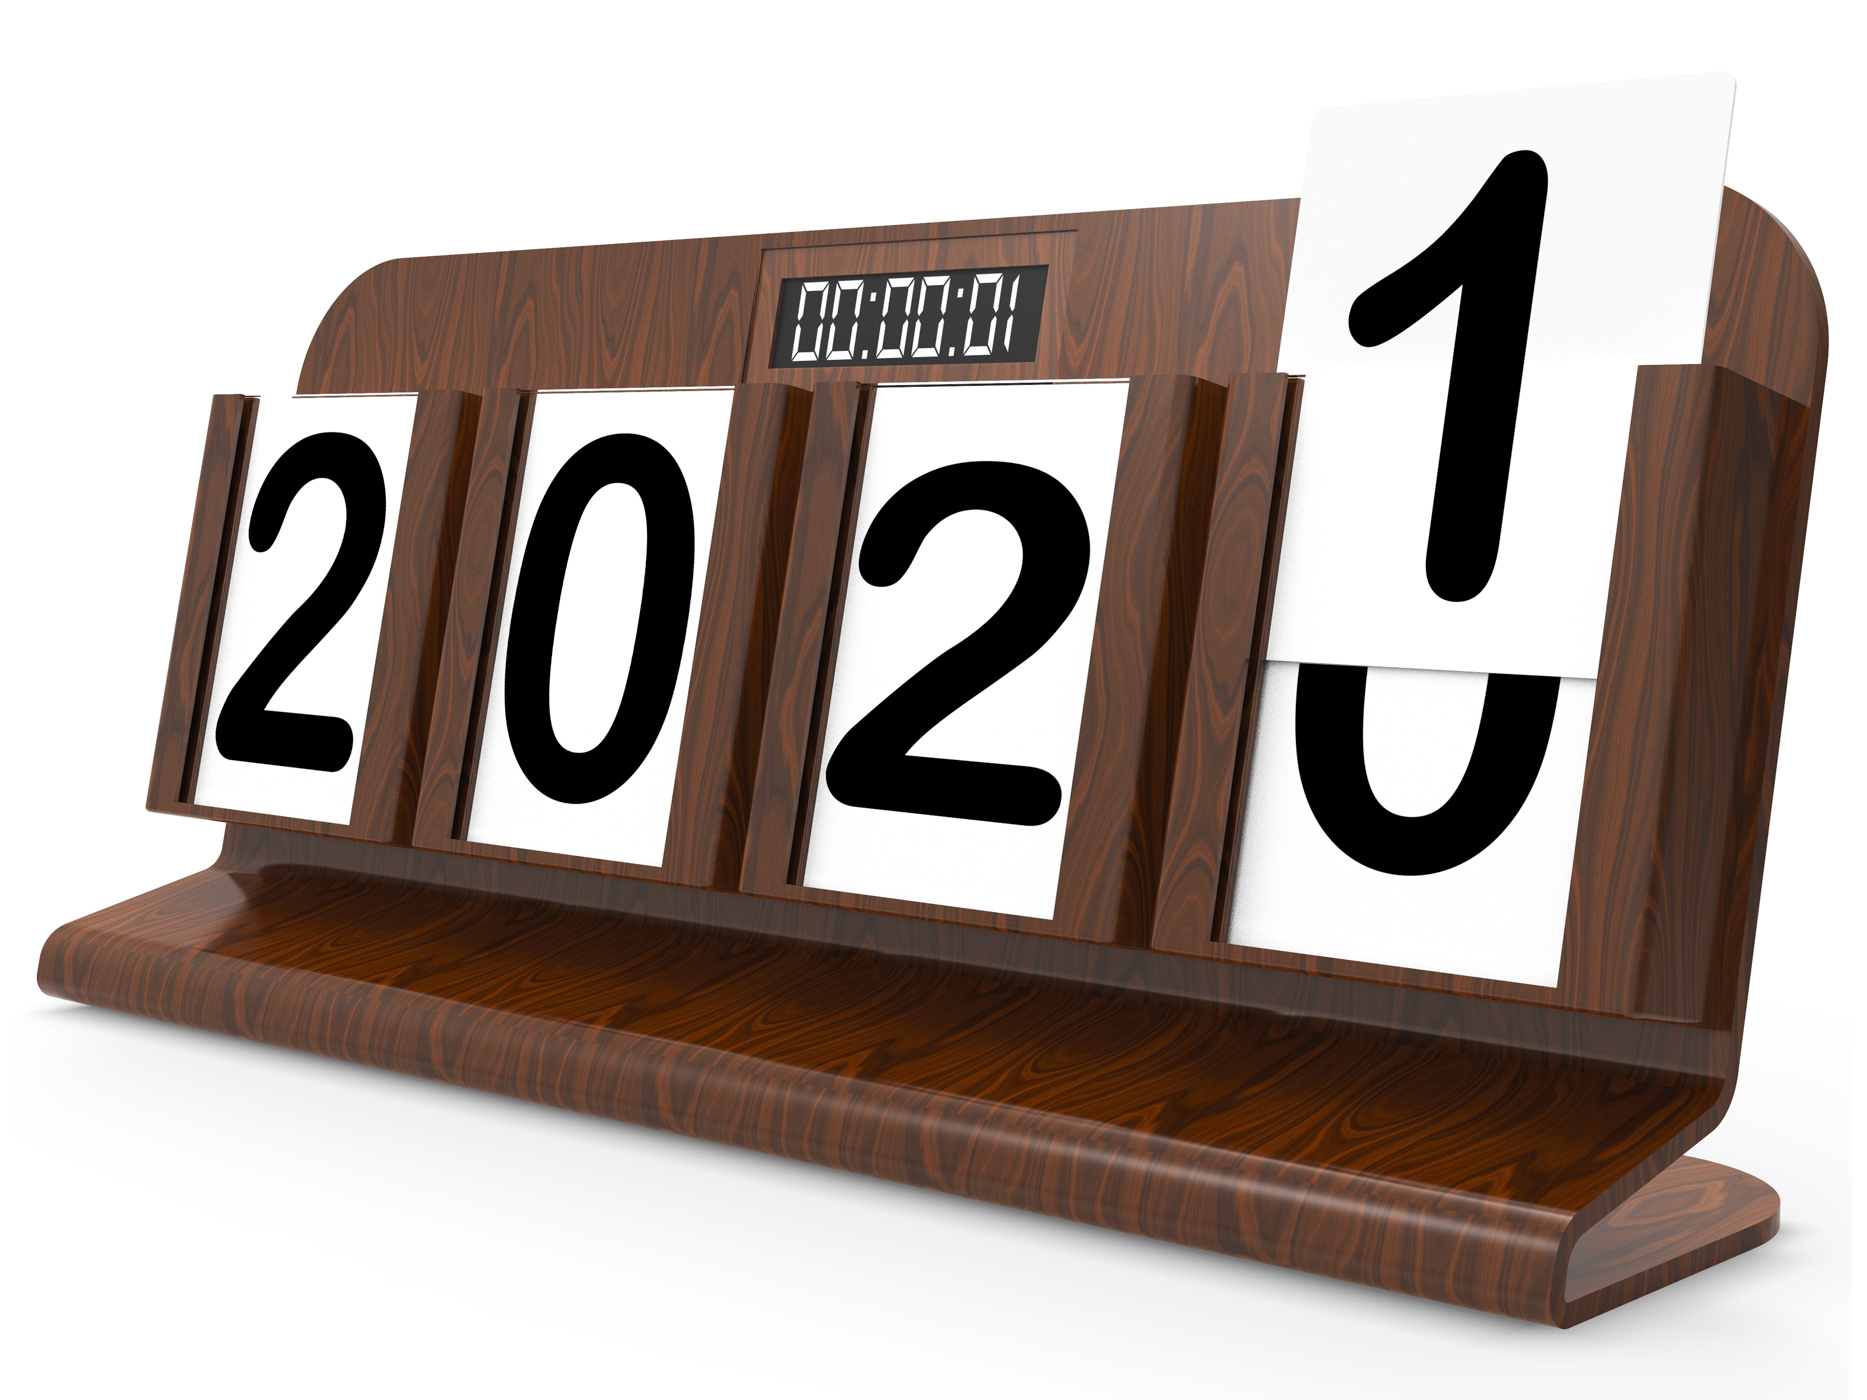 Twenty twenty one shows 2021 new year 3d rendering photo